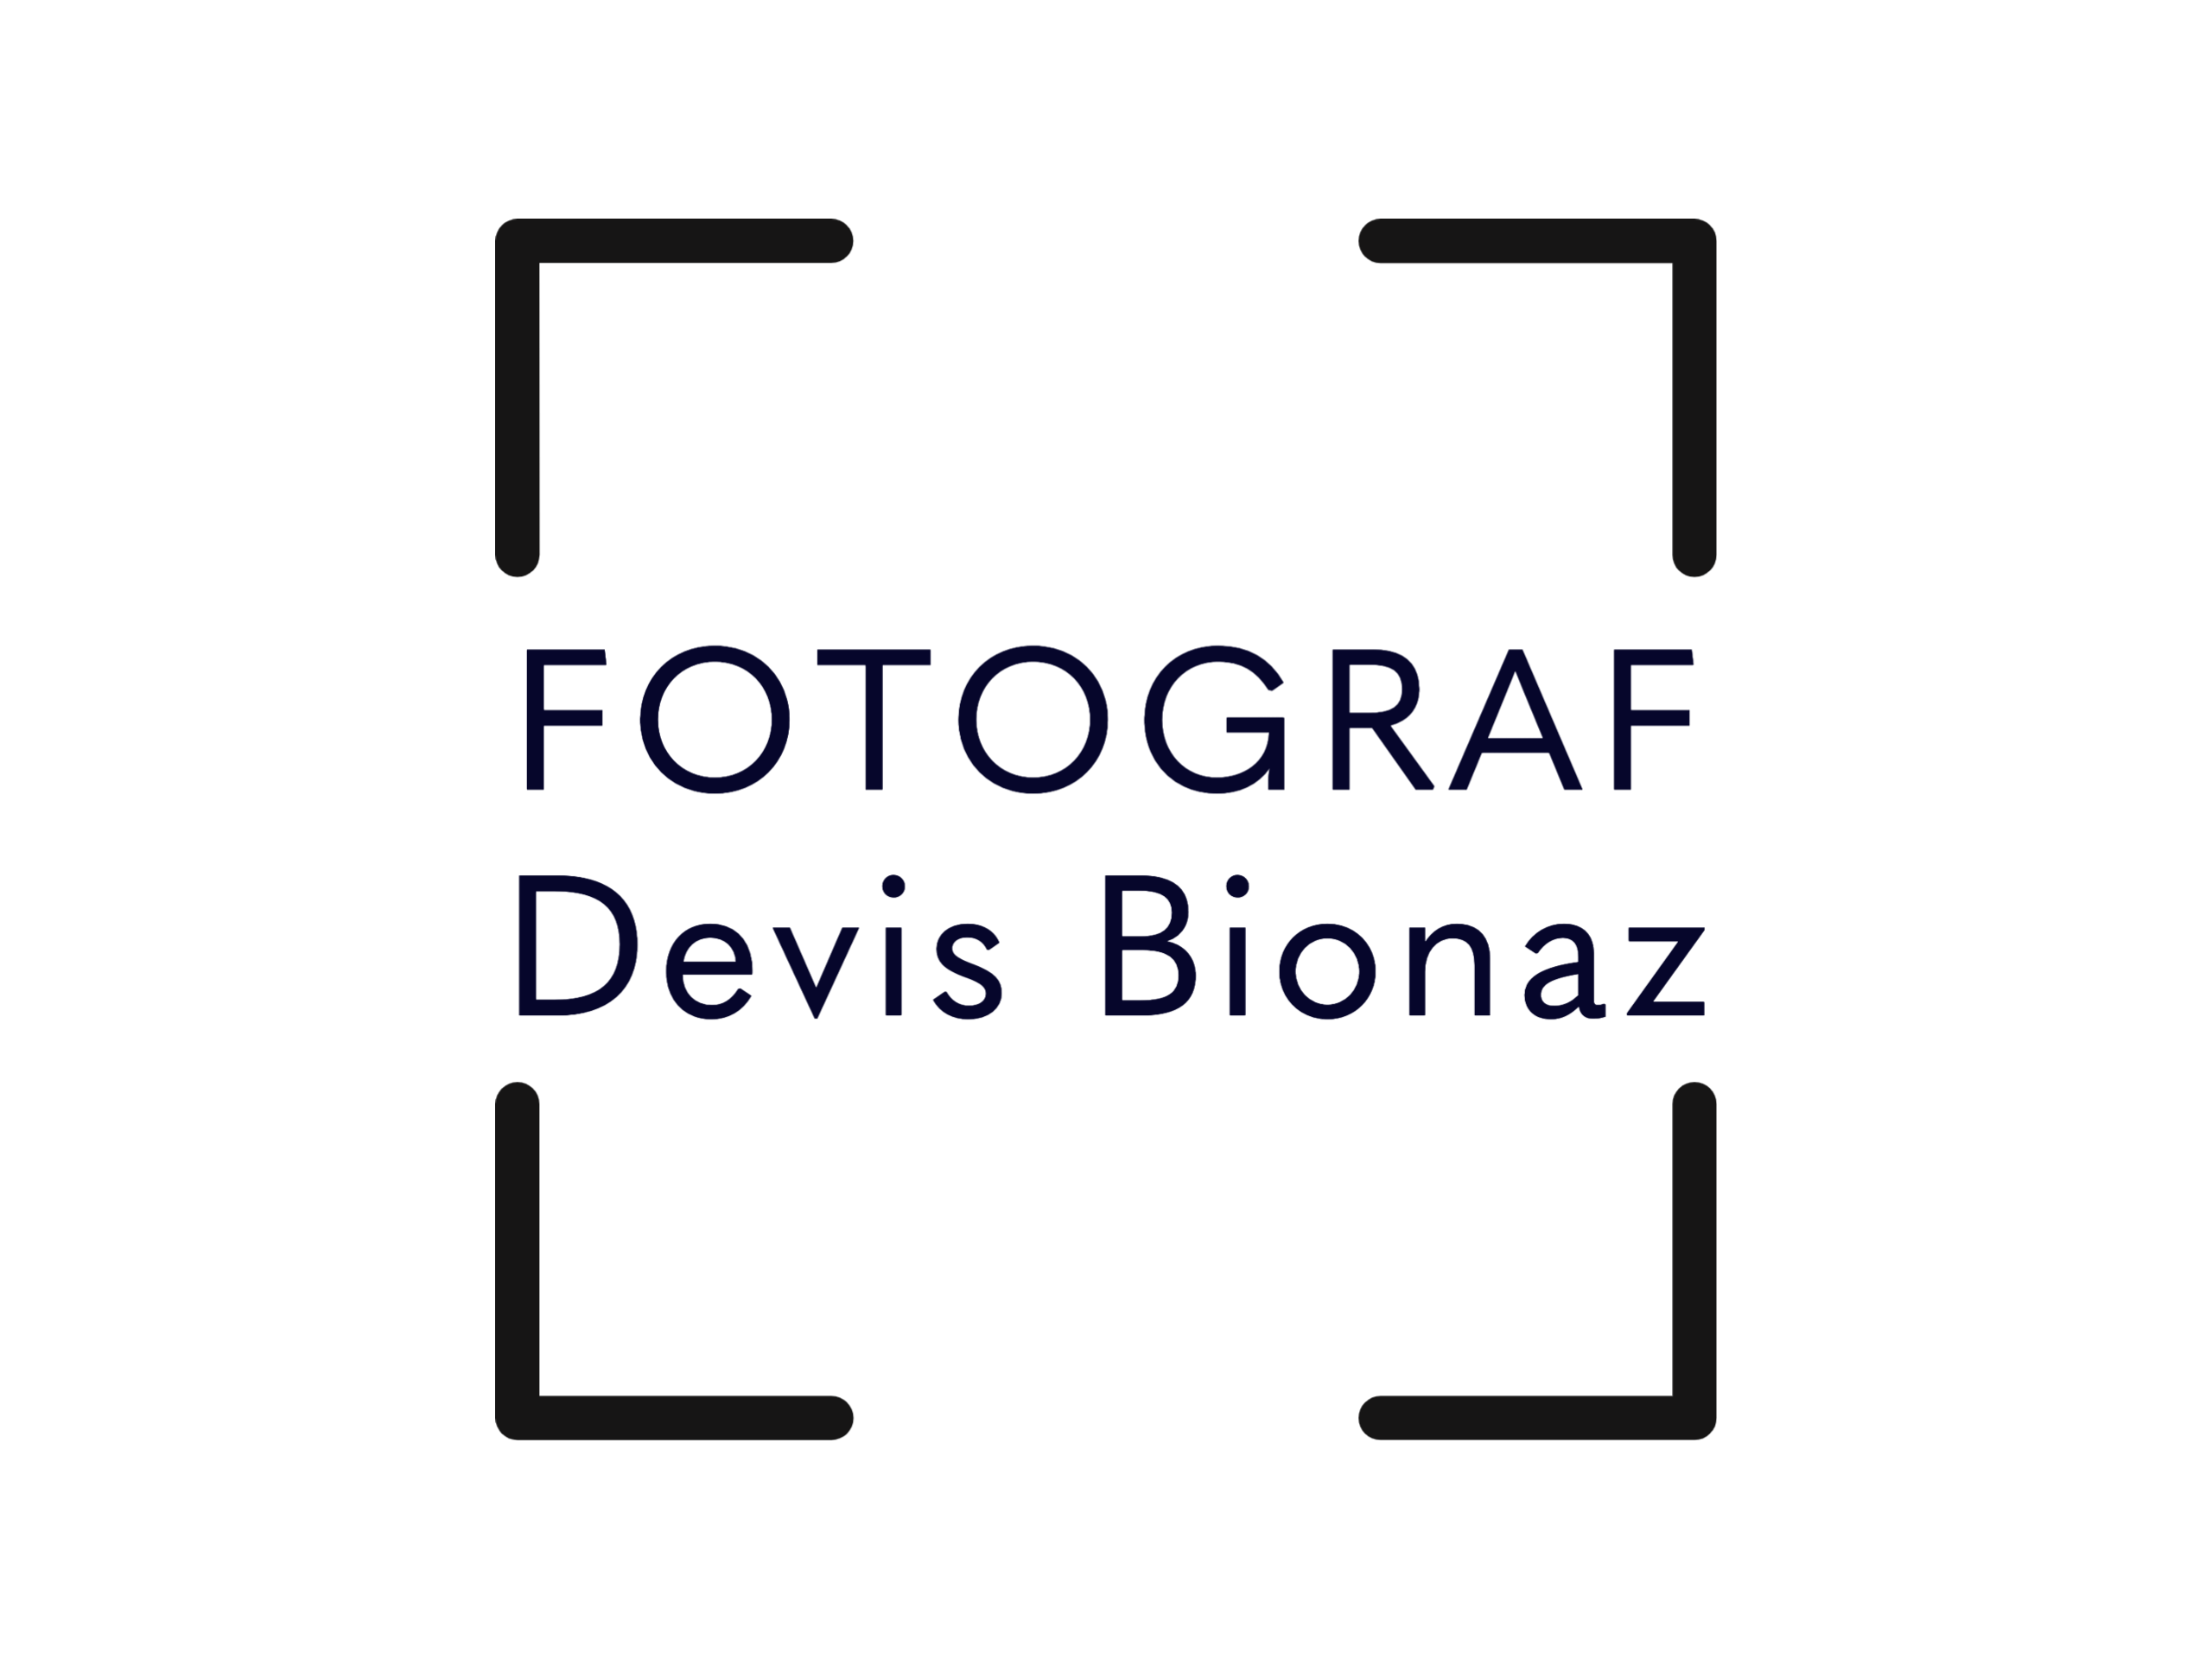 Fotograf Devis Bionaz